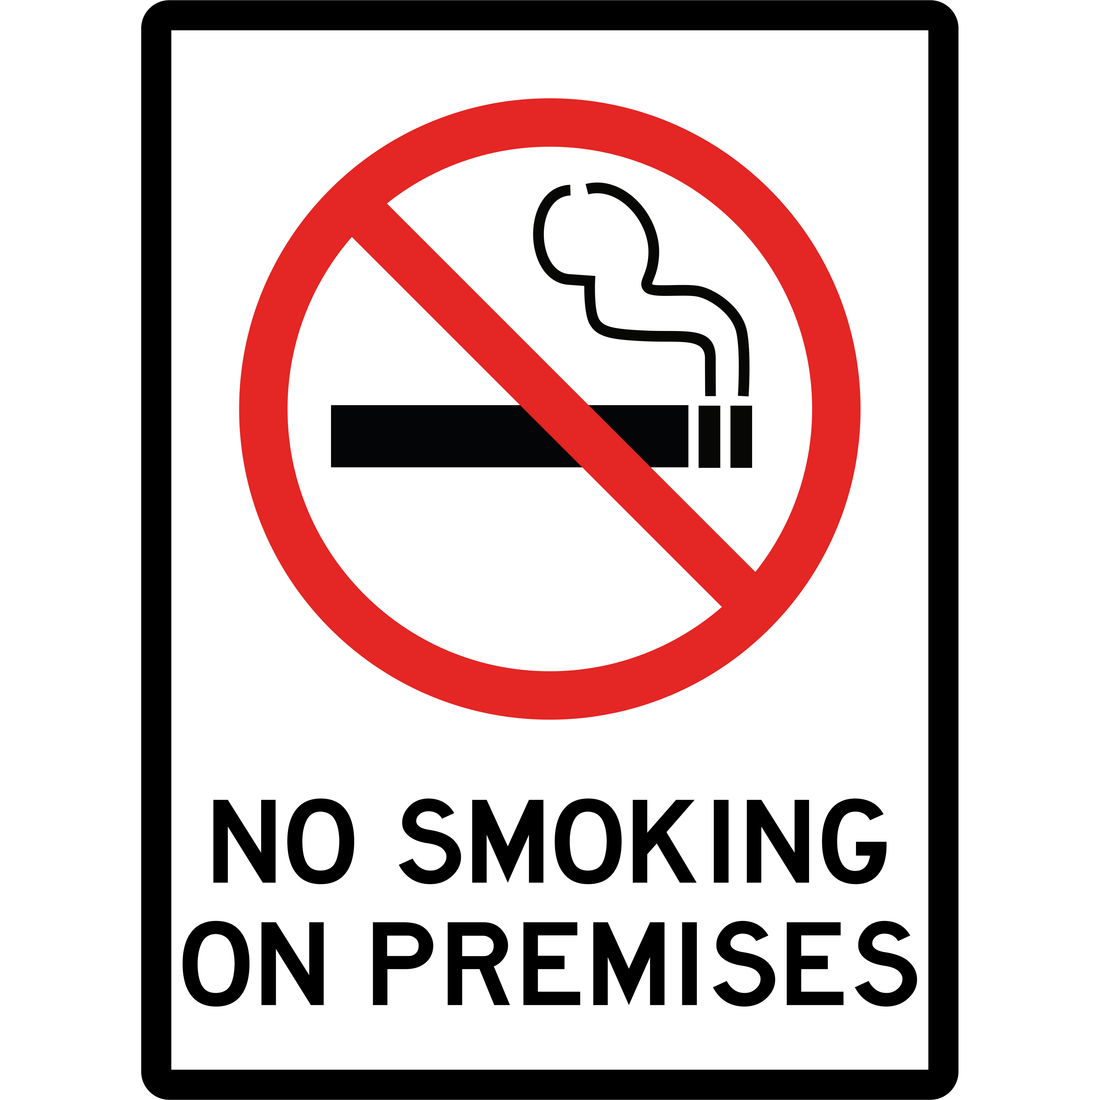 PROHIBITION - NO SMOKING ON PREMISES